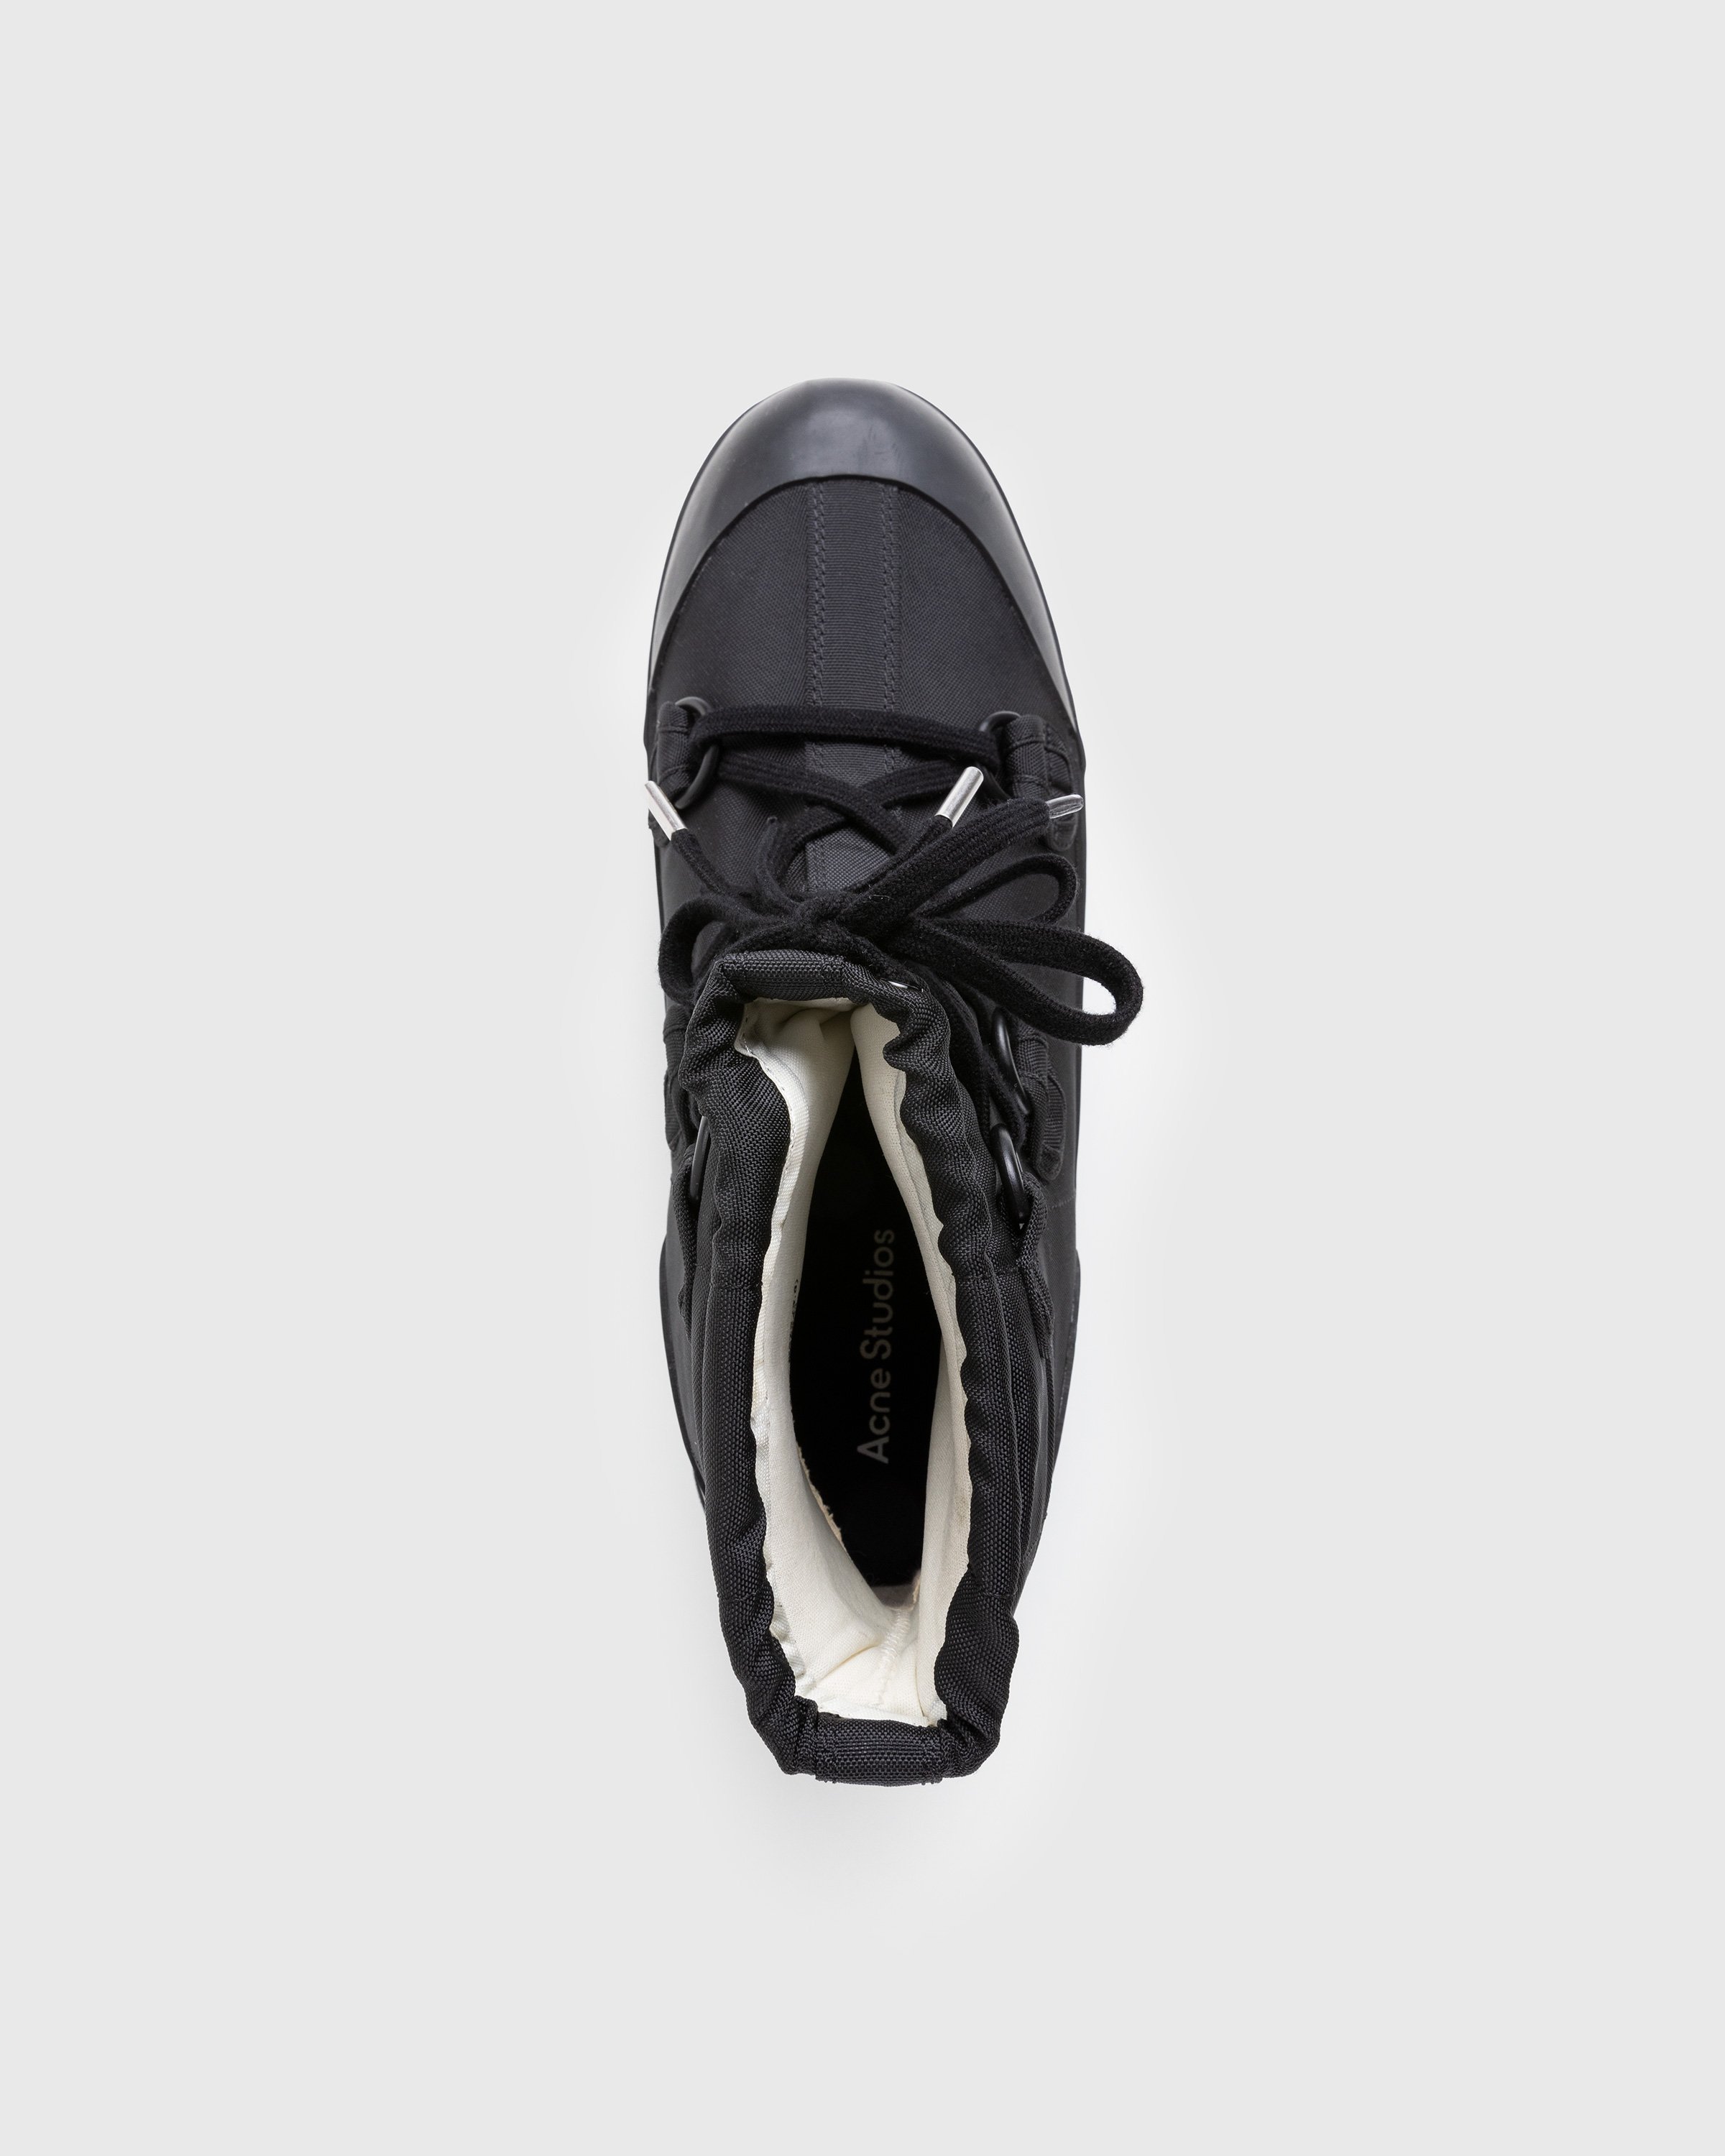 Acne Studios - Lace-Up Boots Black - Footwear - Black - Image 5